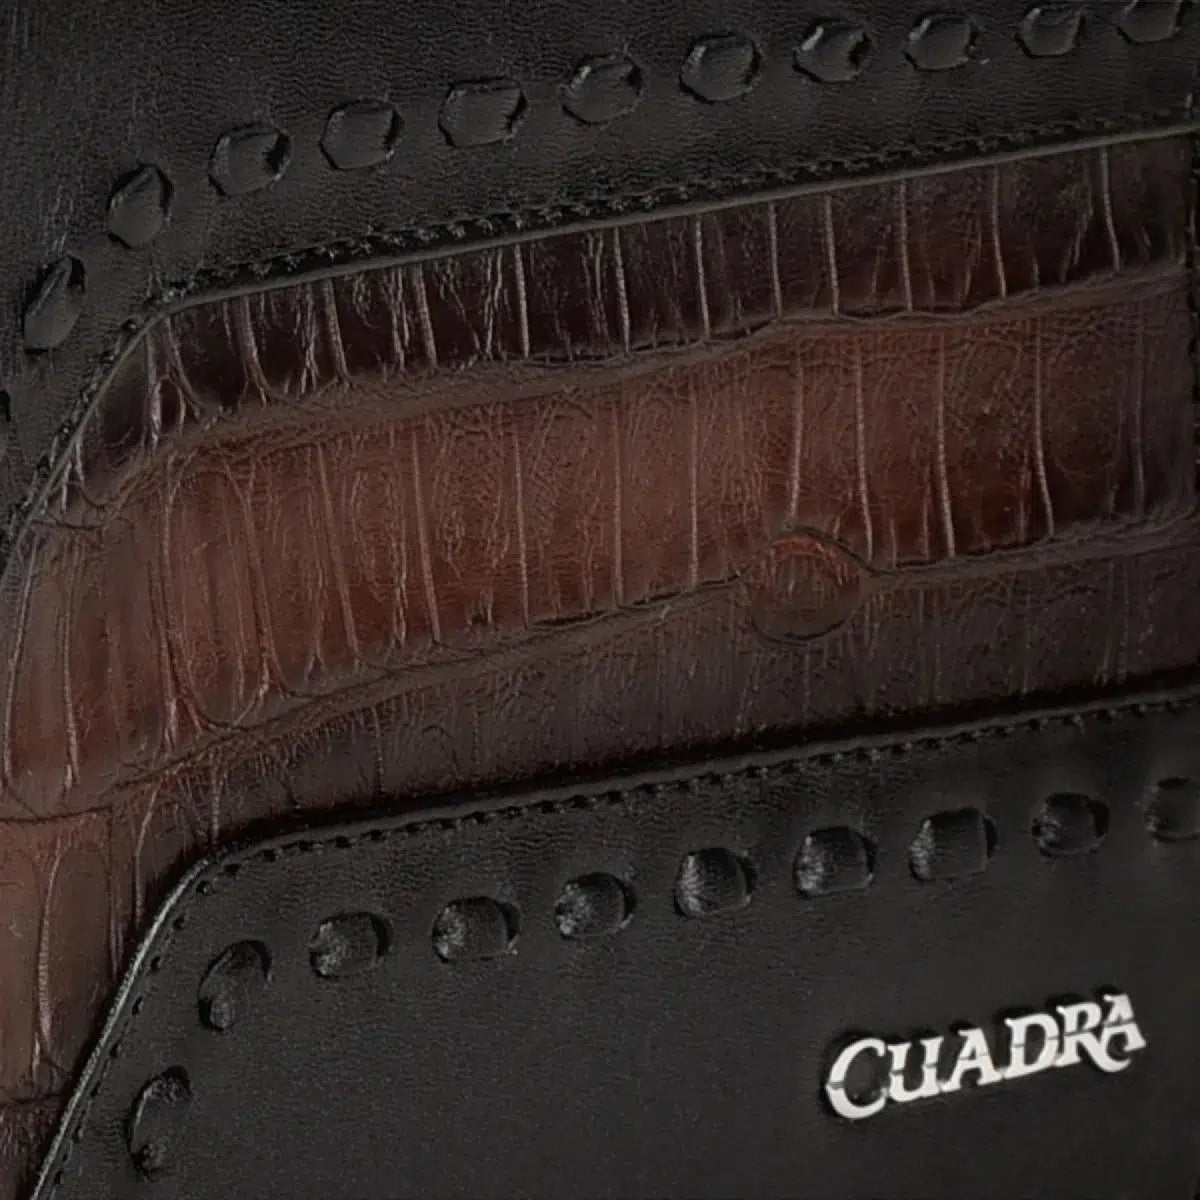 Handmade black bifold exotic leather wallet - B2910AL - Cuadra Shop